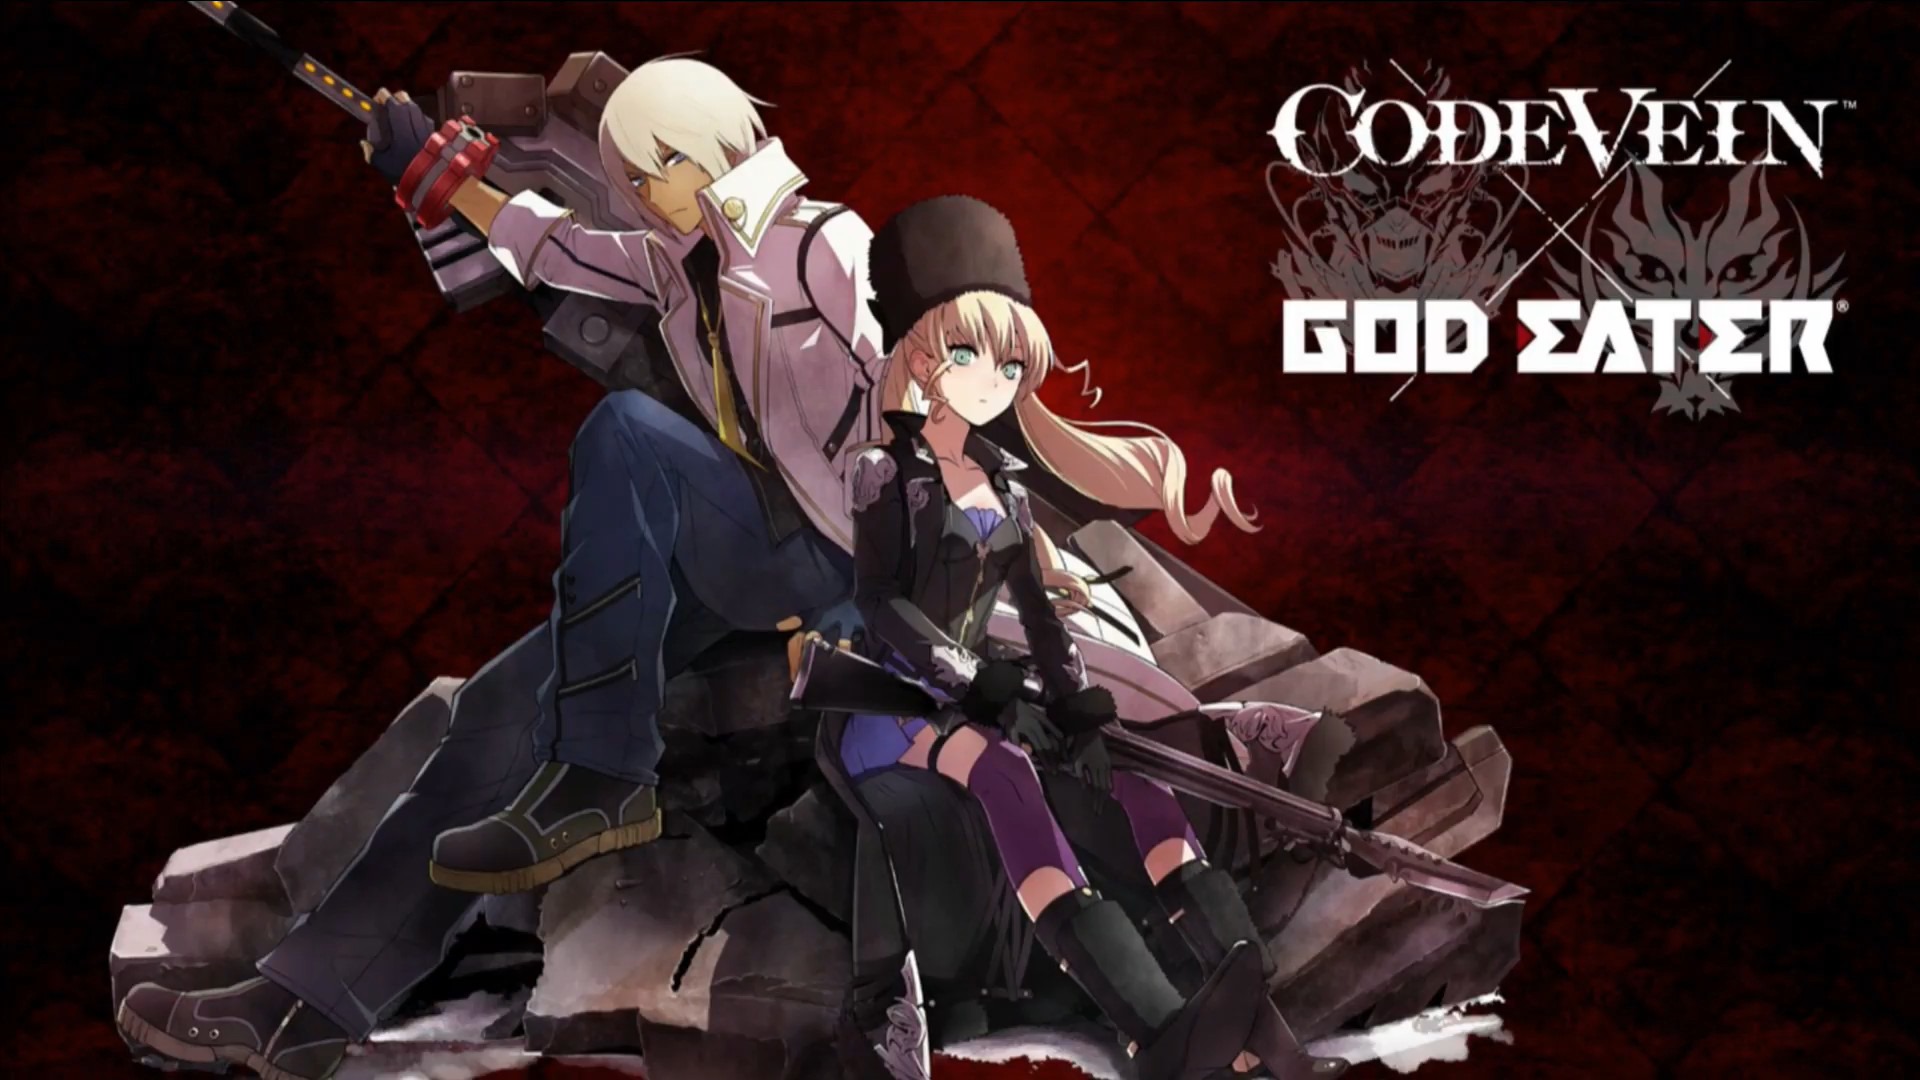 Anime Souls-like 'Code Vein' Delayed Until 2019